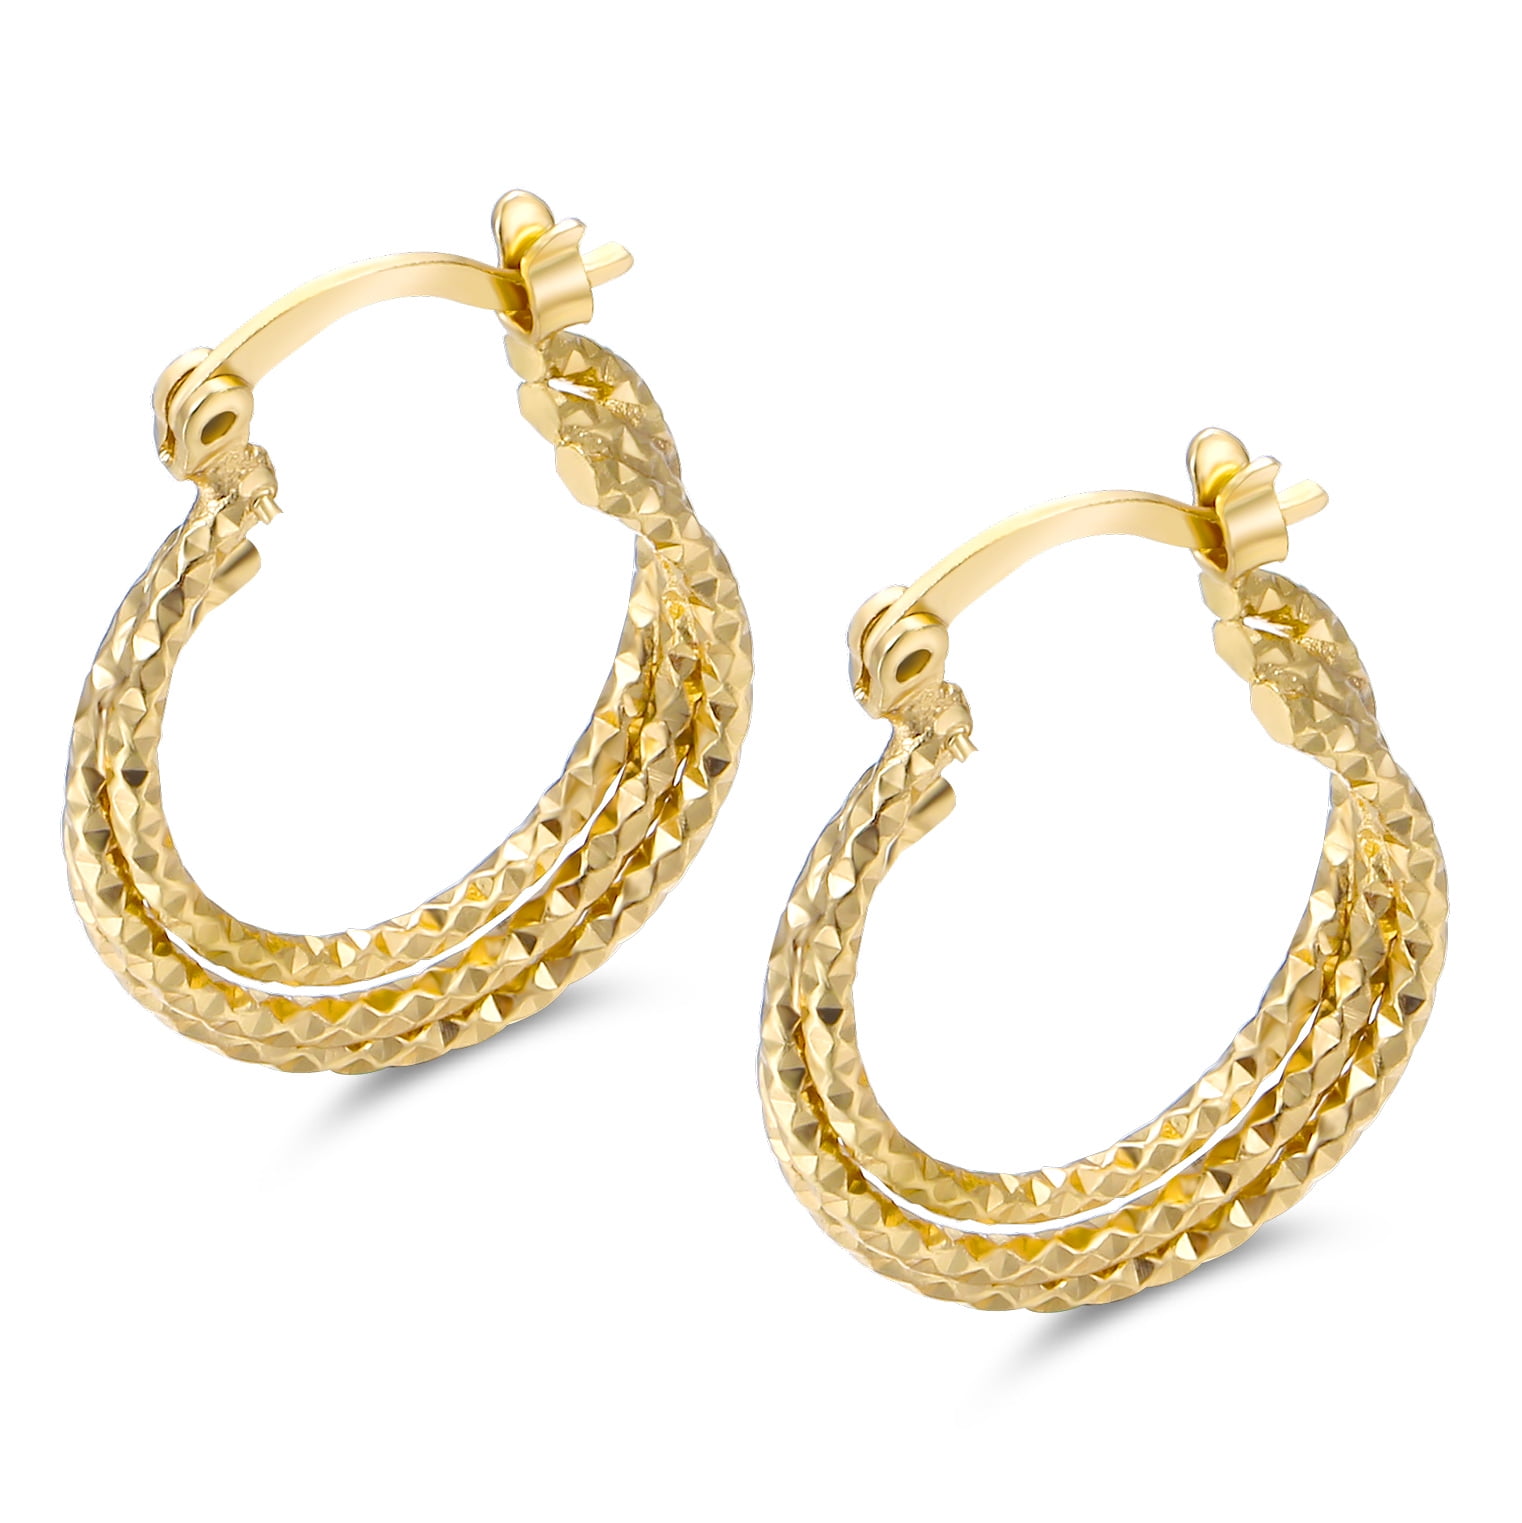 Sevil - Hinge Back Rhombus Patterned Hoop Earrings Made with 18K Gold ...